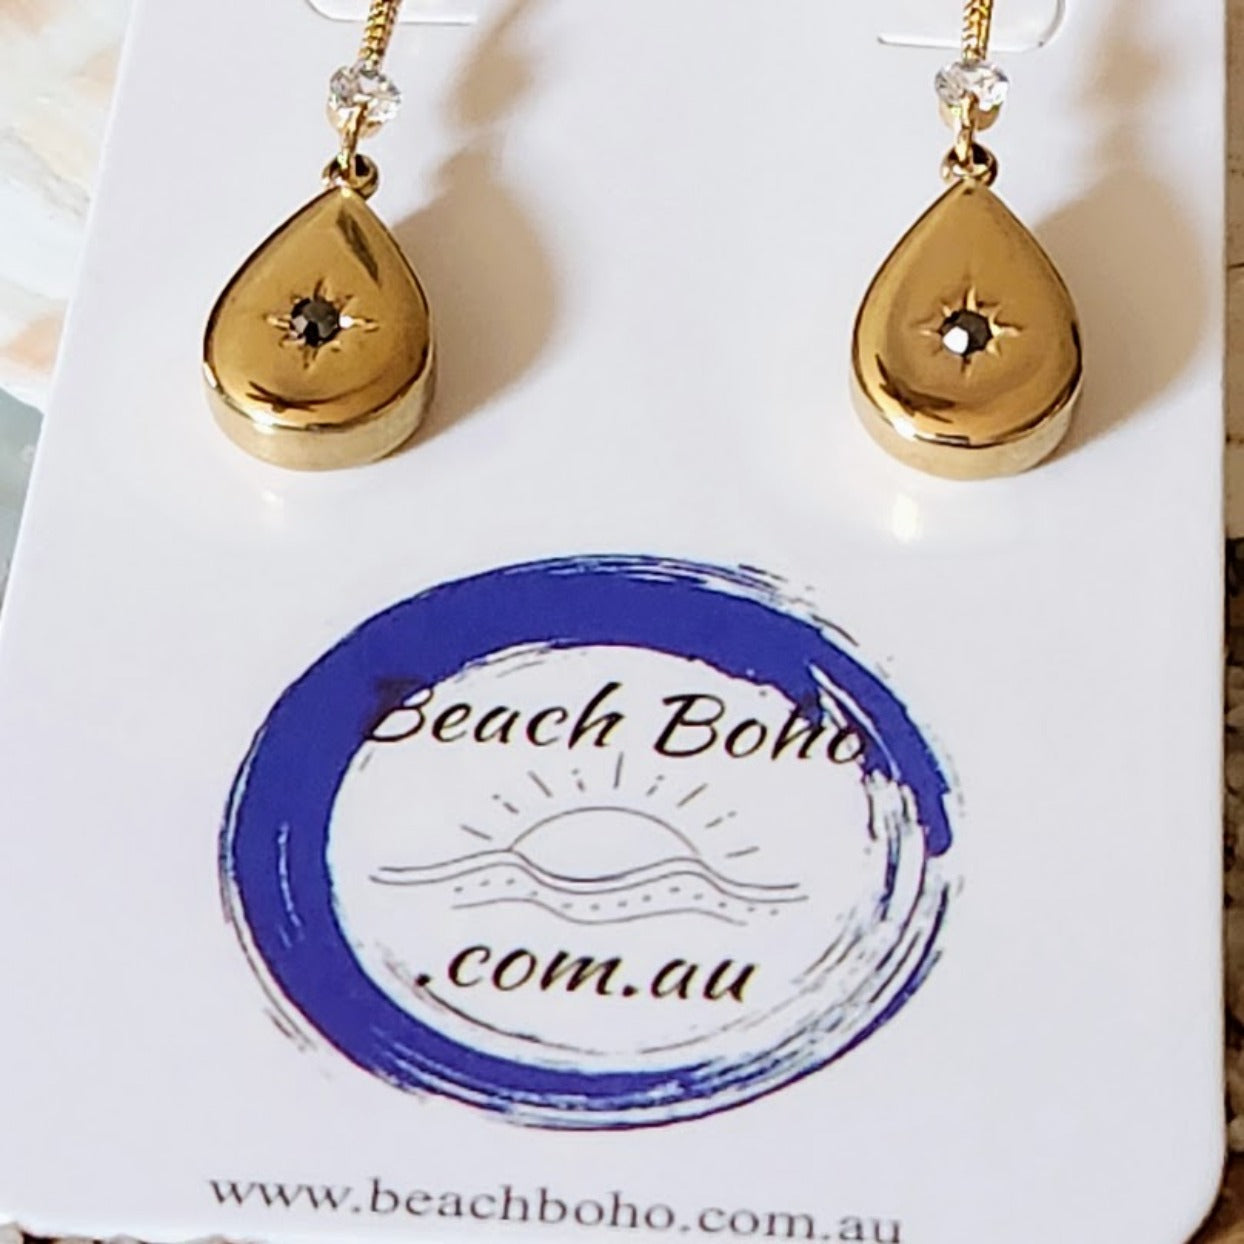 STAR DROP - 925 GOLD FILLED DROP EARRINGS - Premium earrings from www.beachboho.com.au - Just $45! Shop now at www.beachboho.com.au